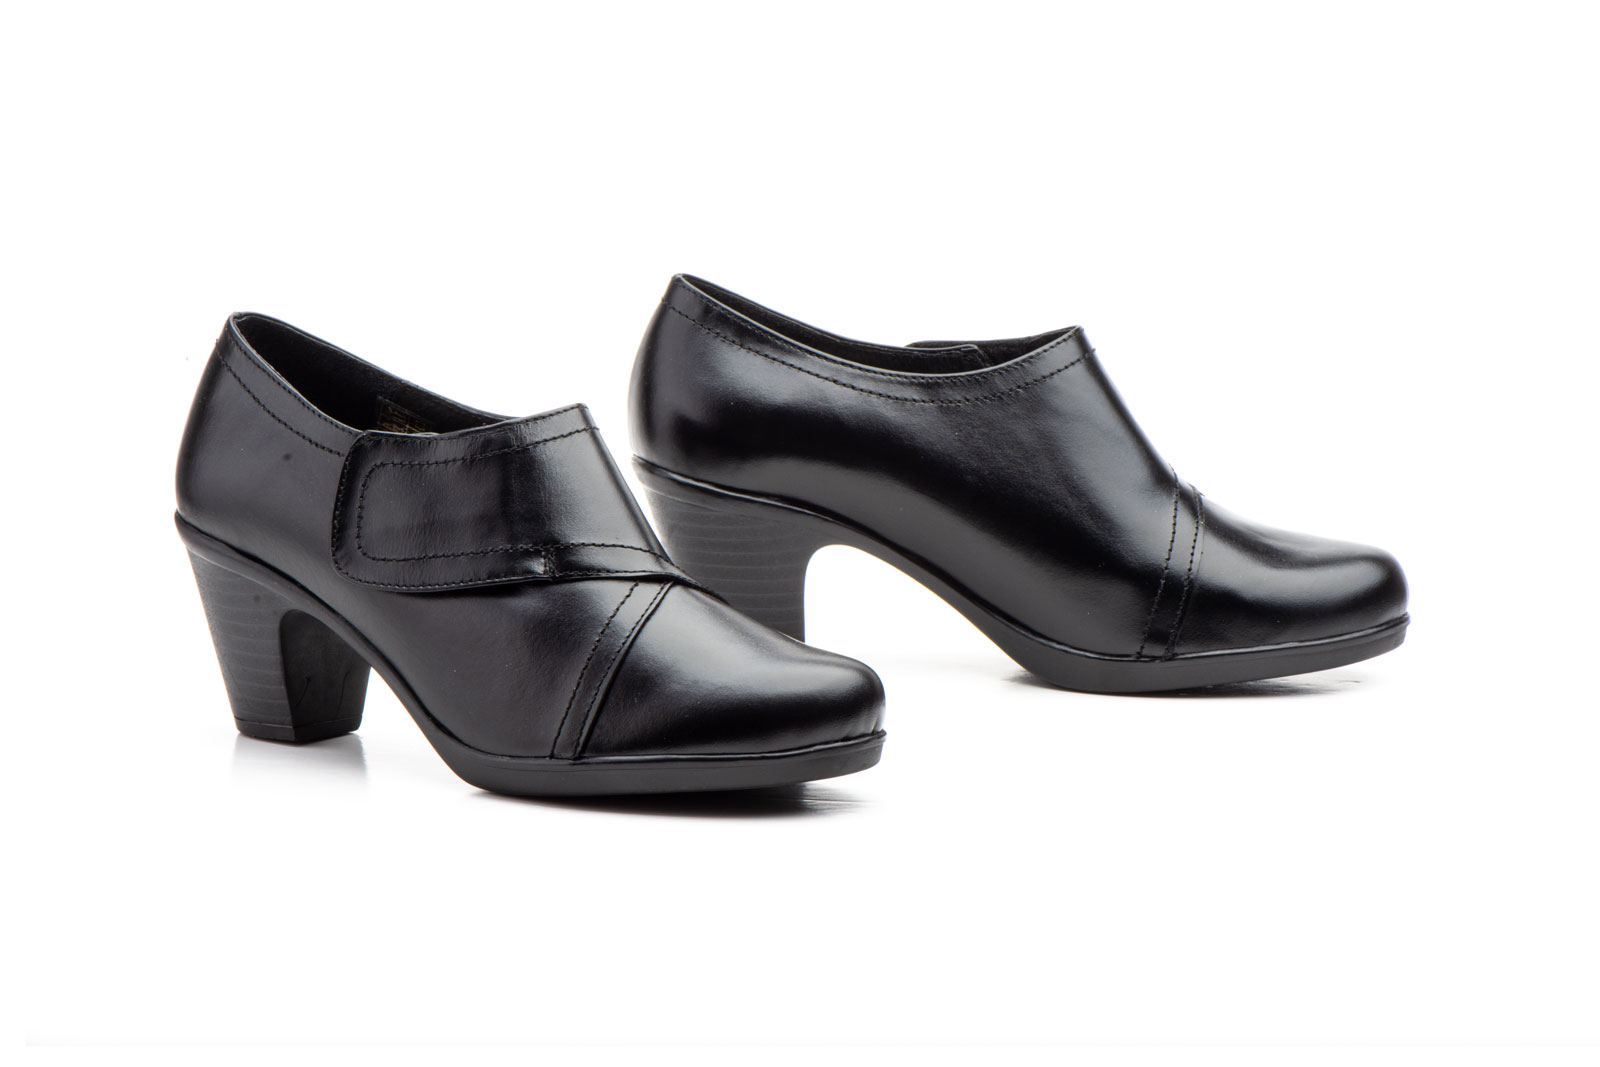 Zapatos Mujer Piel Negro Tipo Velcro  -  Ref. 5576 Negro